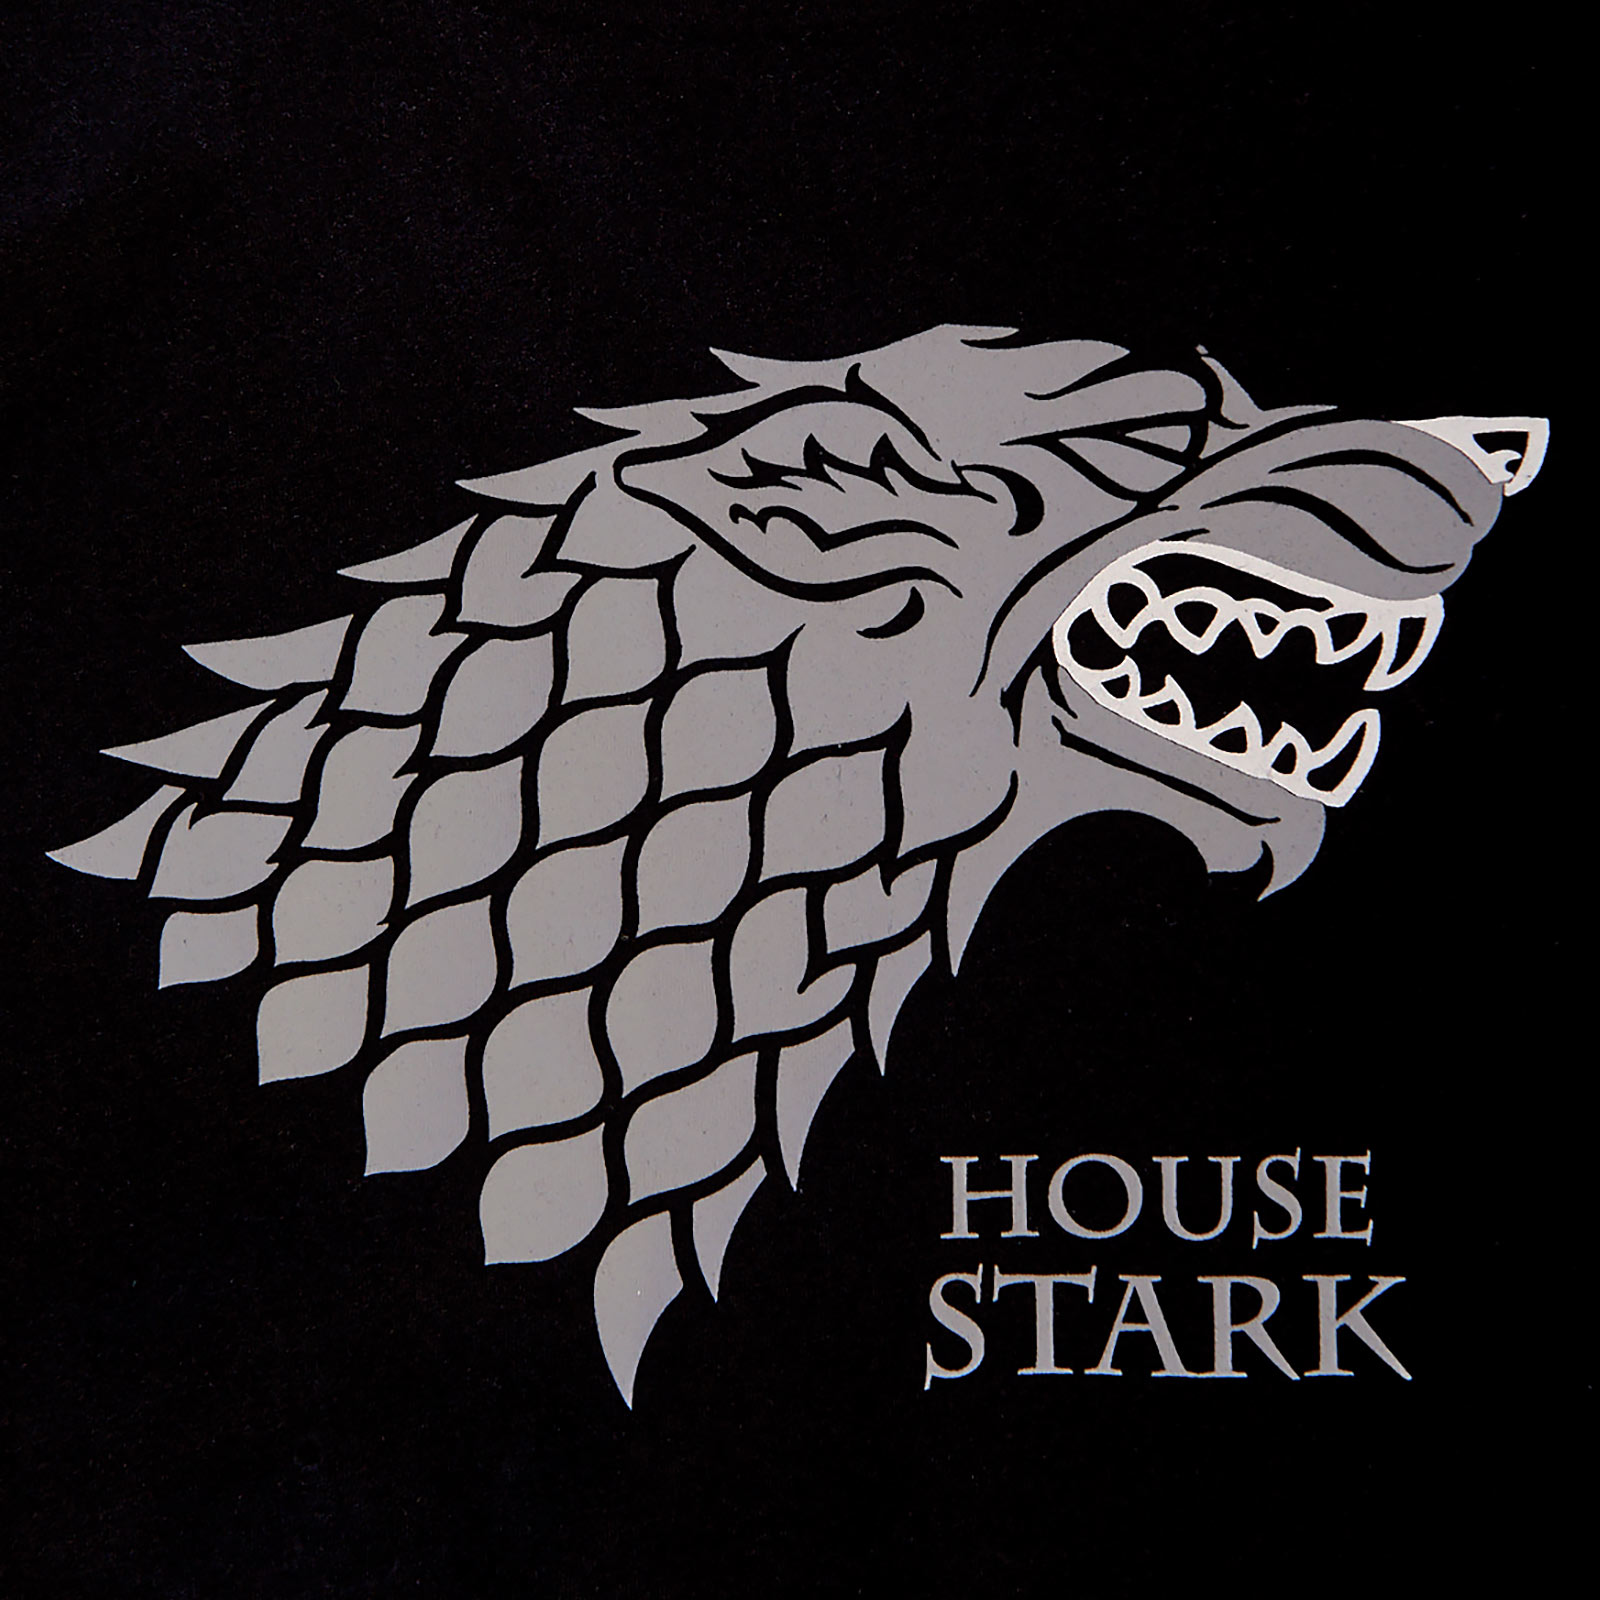 Game of Thrones - Stark Crest Pyjama Shorts Women